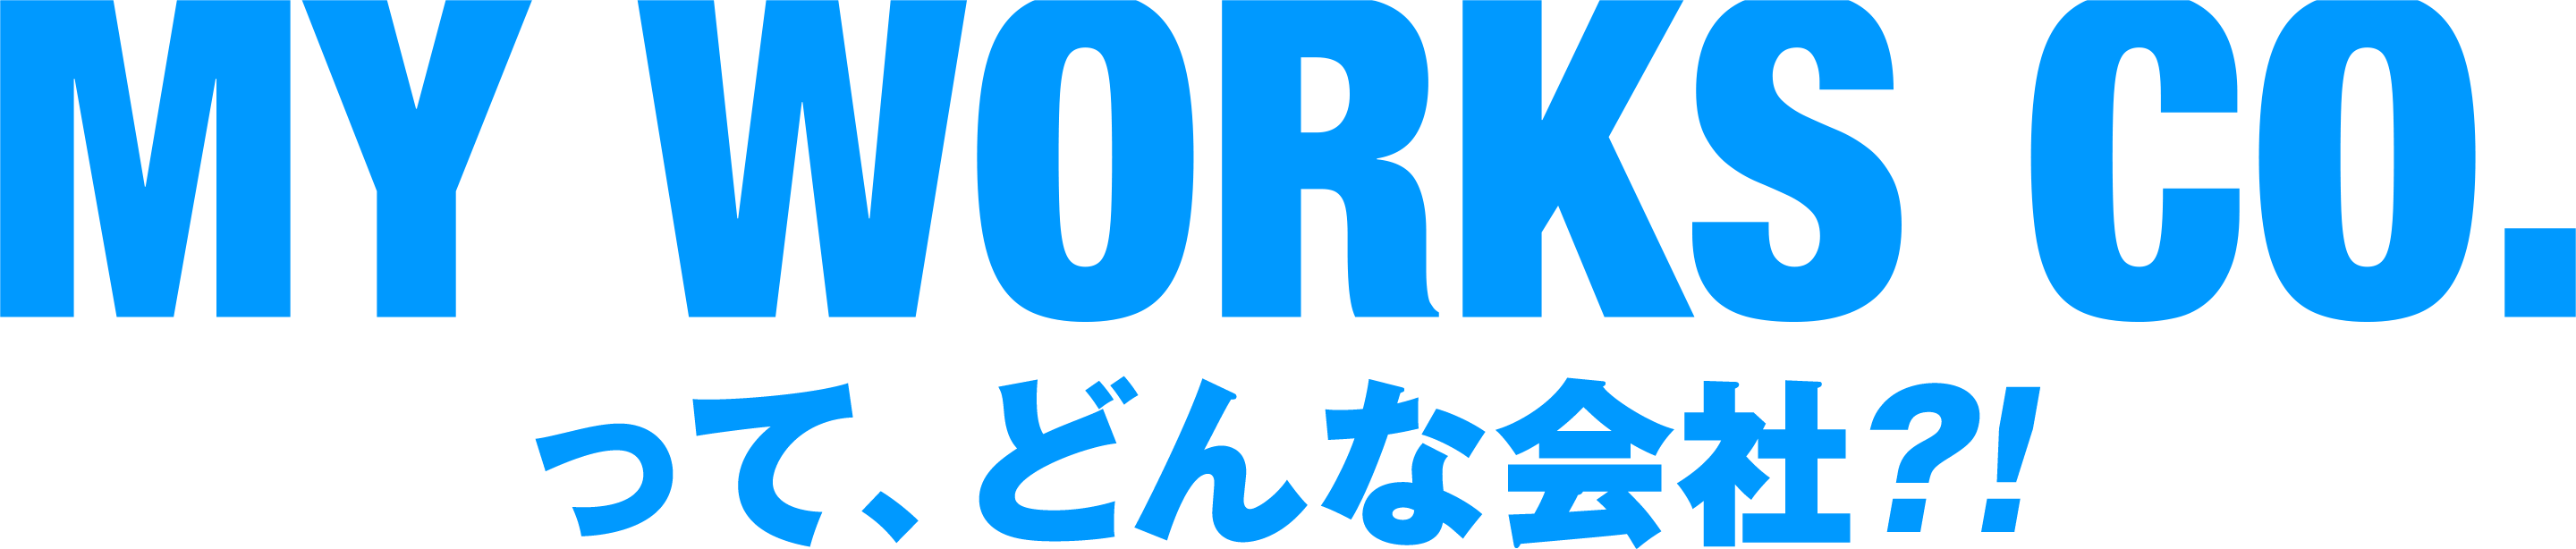 MY WORKS CO.ってどんな会社?!